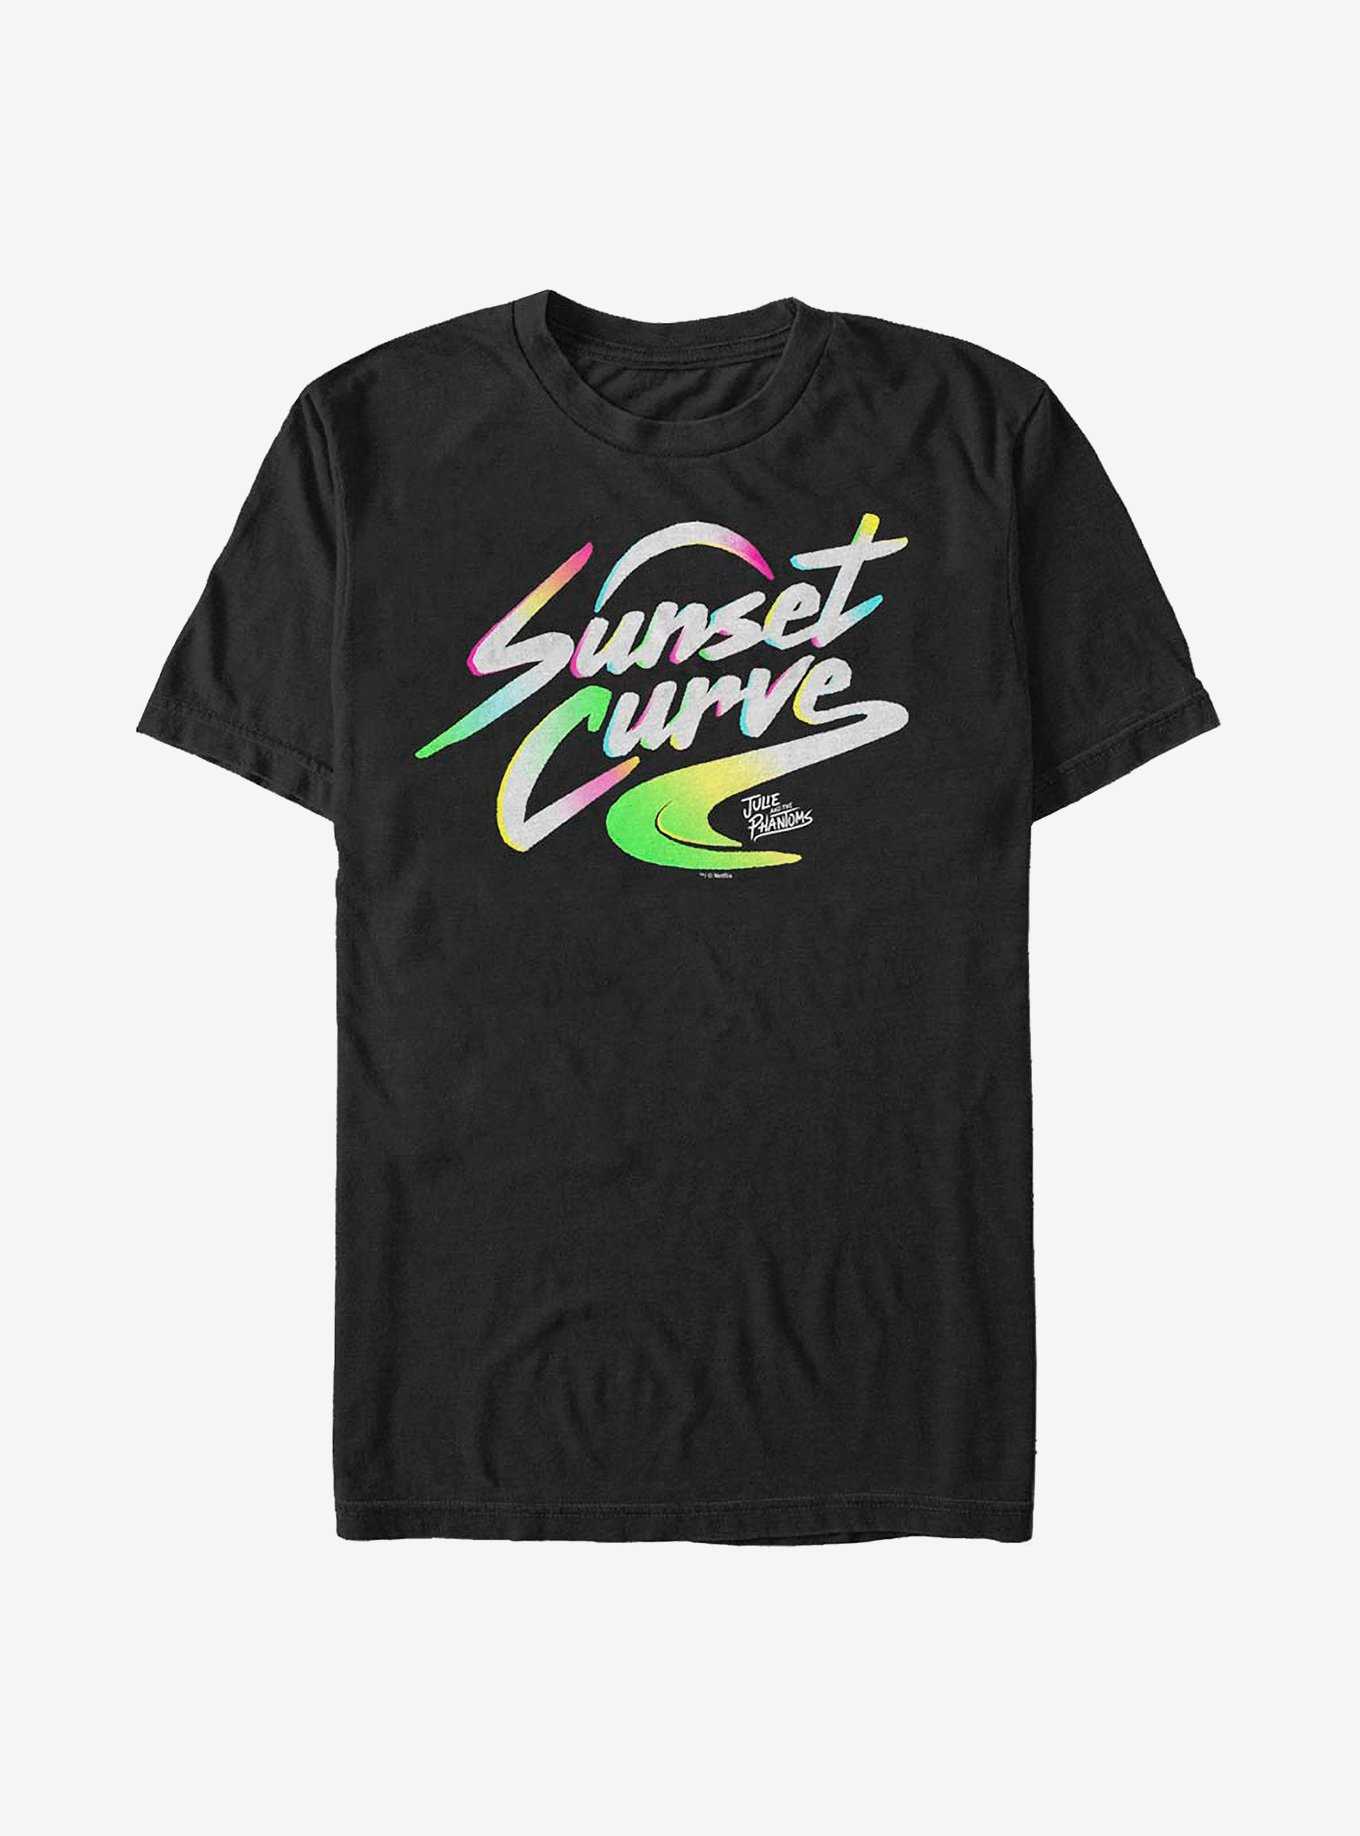 Teenage Mutant Ninja Turtles Men's Retro Sunset Circle Graphic T-Shirt, X-Large, Cotton